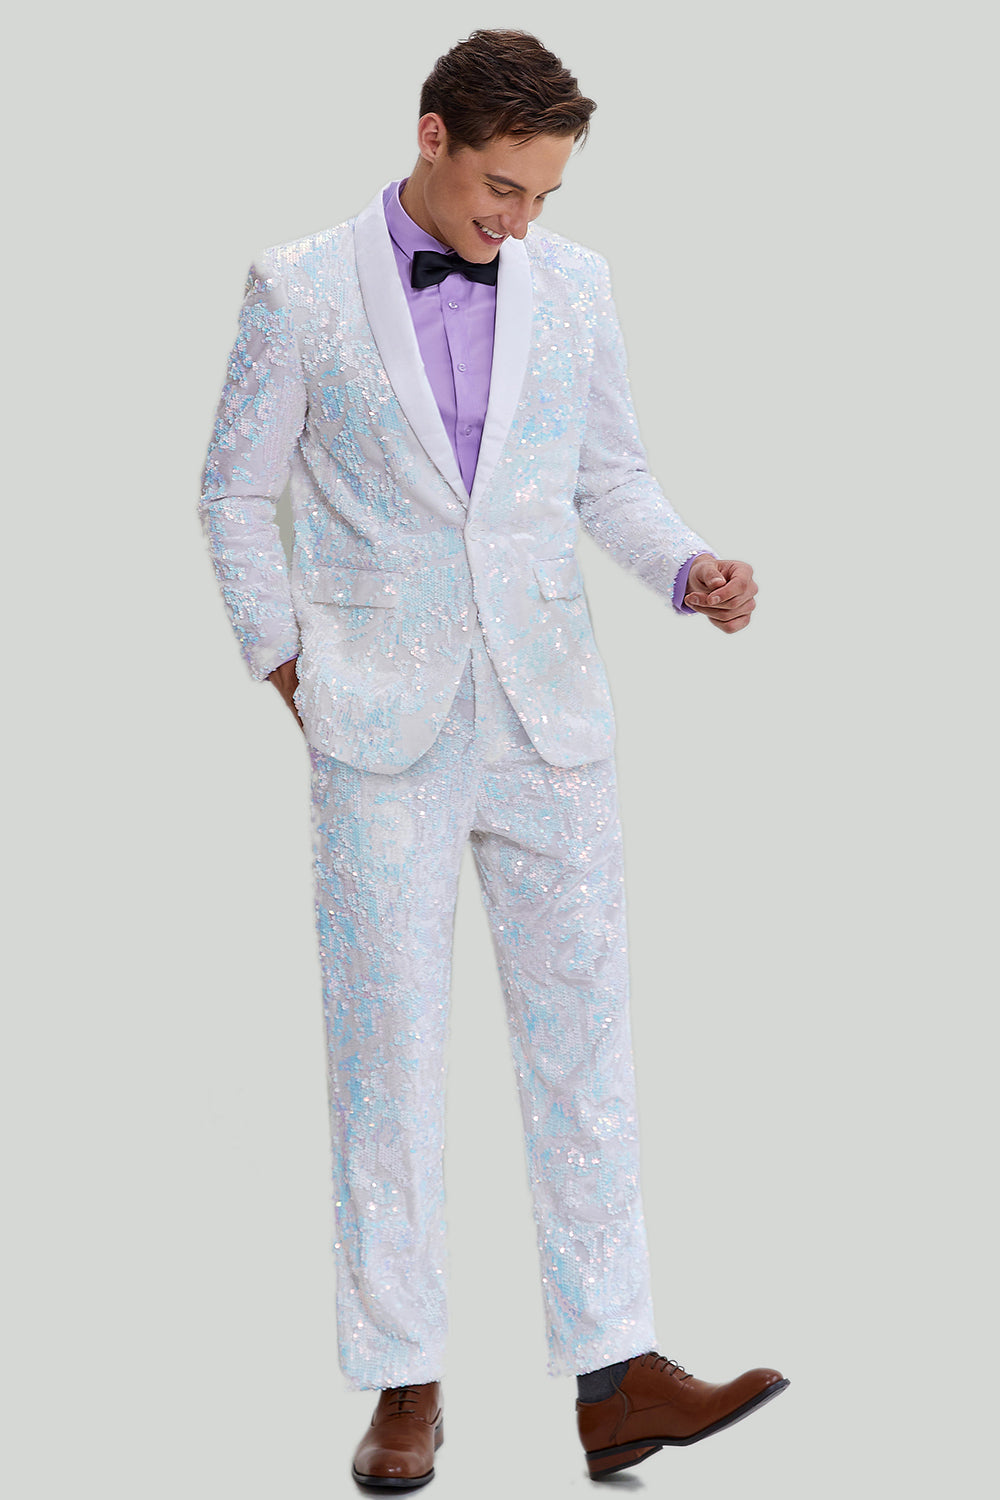 Men's Slim Fit 2 Piece Suit One Button Shawl Lapel Tuxedo for Prom